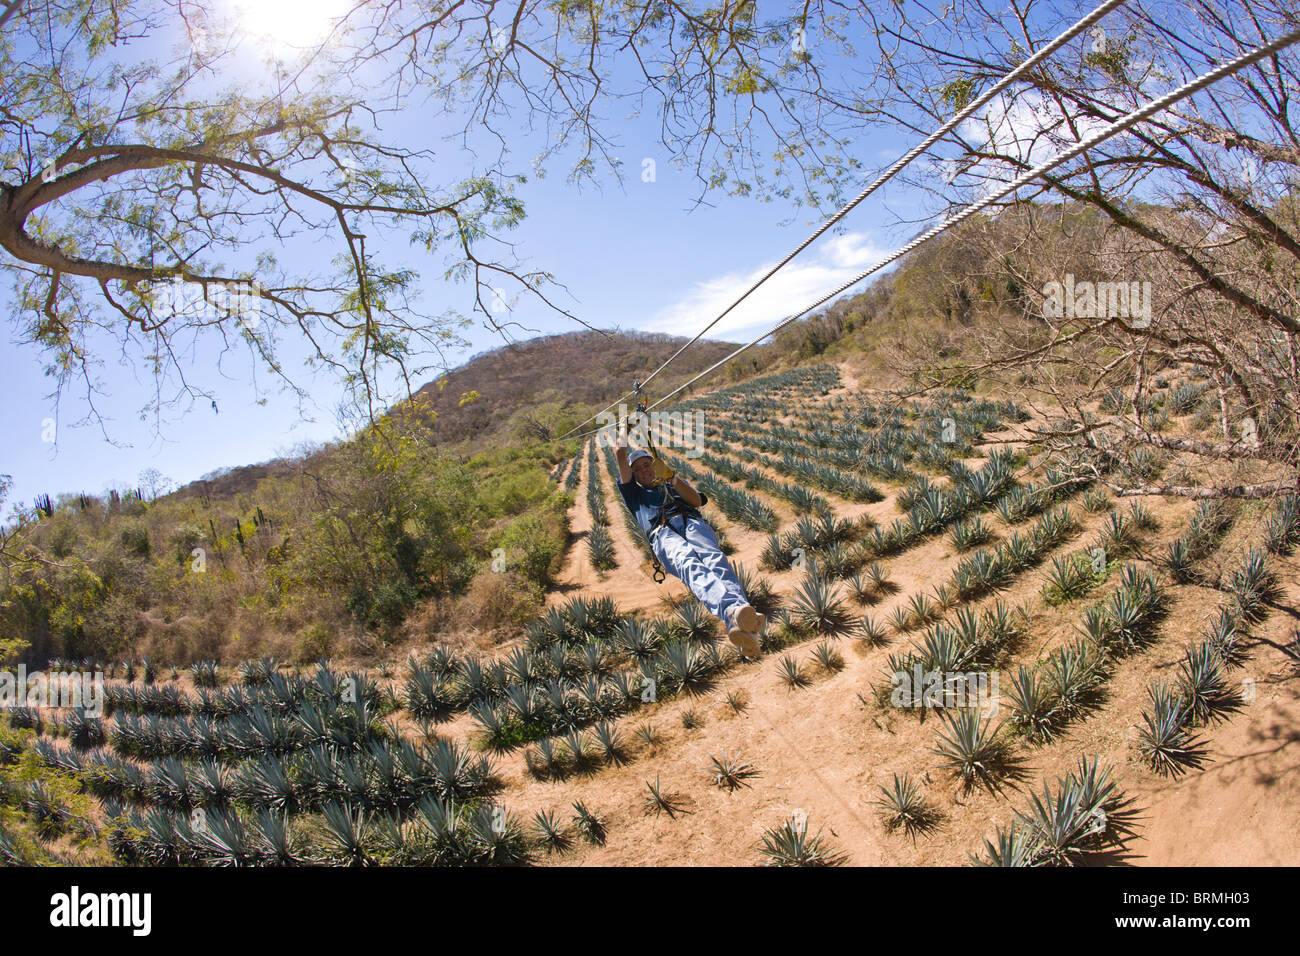 Huana Coa Canopy Adventure, staff and participants, near La Noria, near Mazatlan, Sinaloa State, Mexico Stock Photo